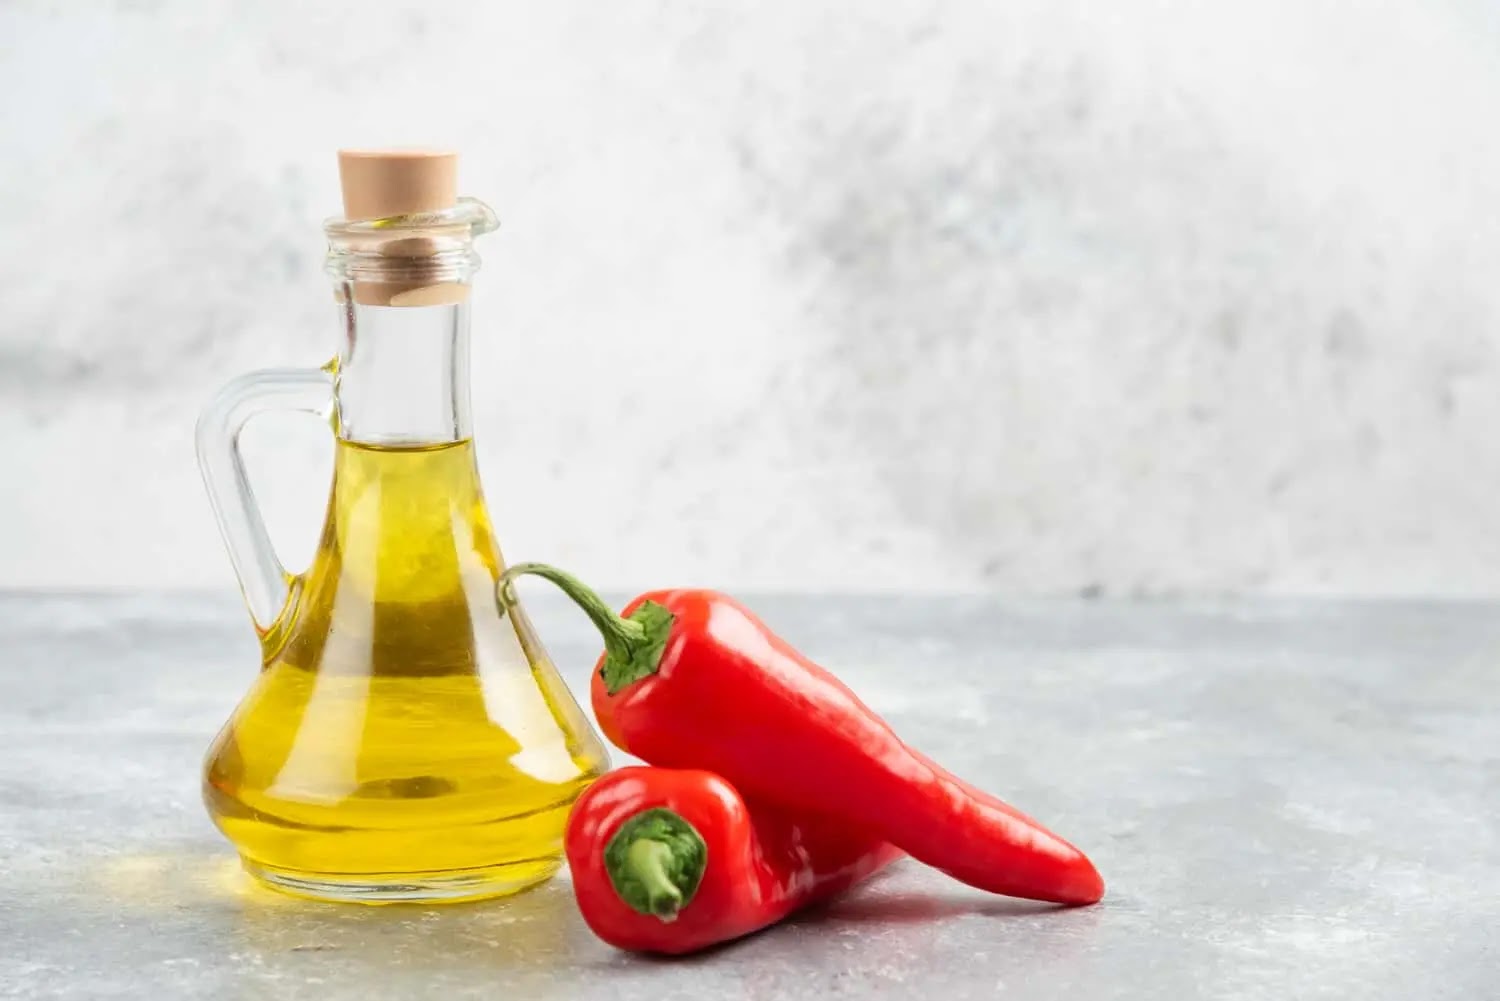 Health Benefits of Chili Oil